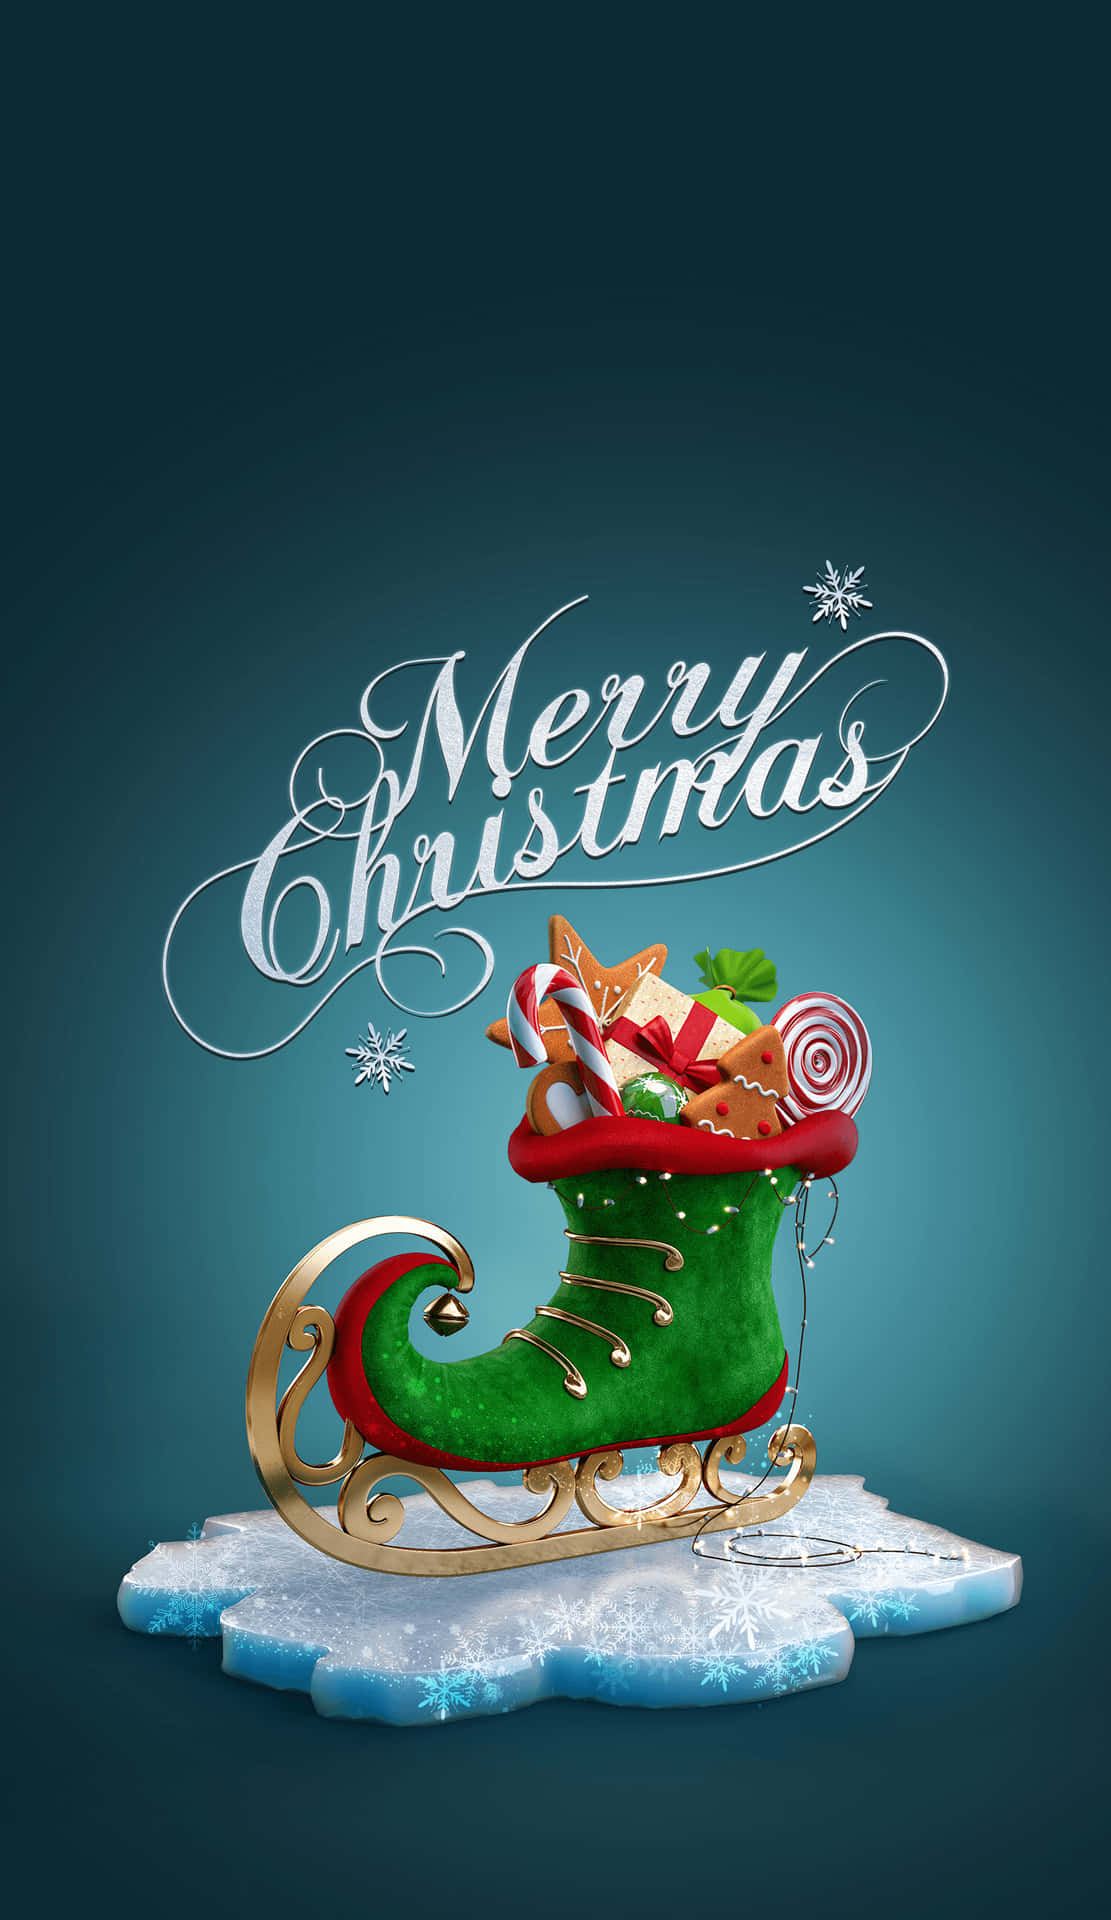 Celebrate the Holidays with a Joyful Christmas Card